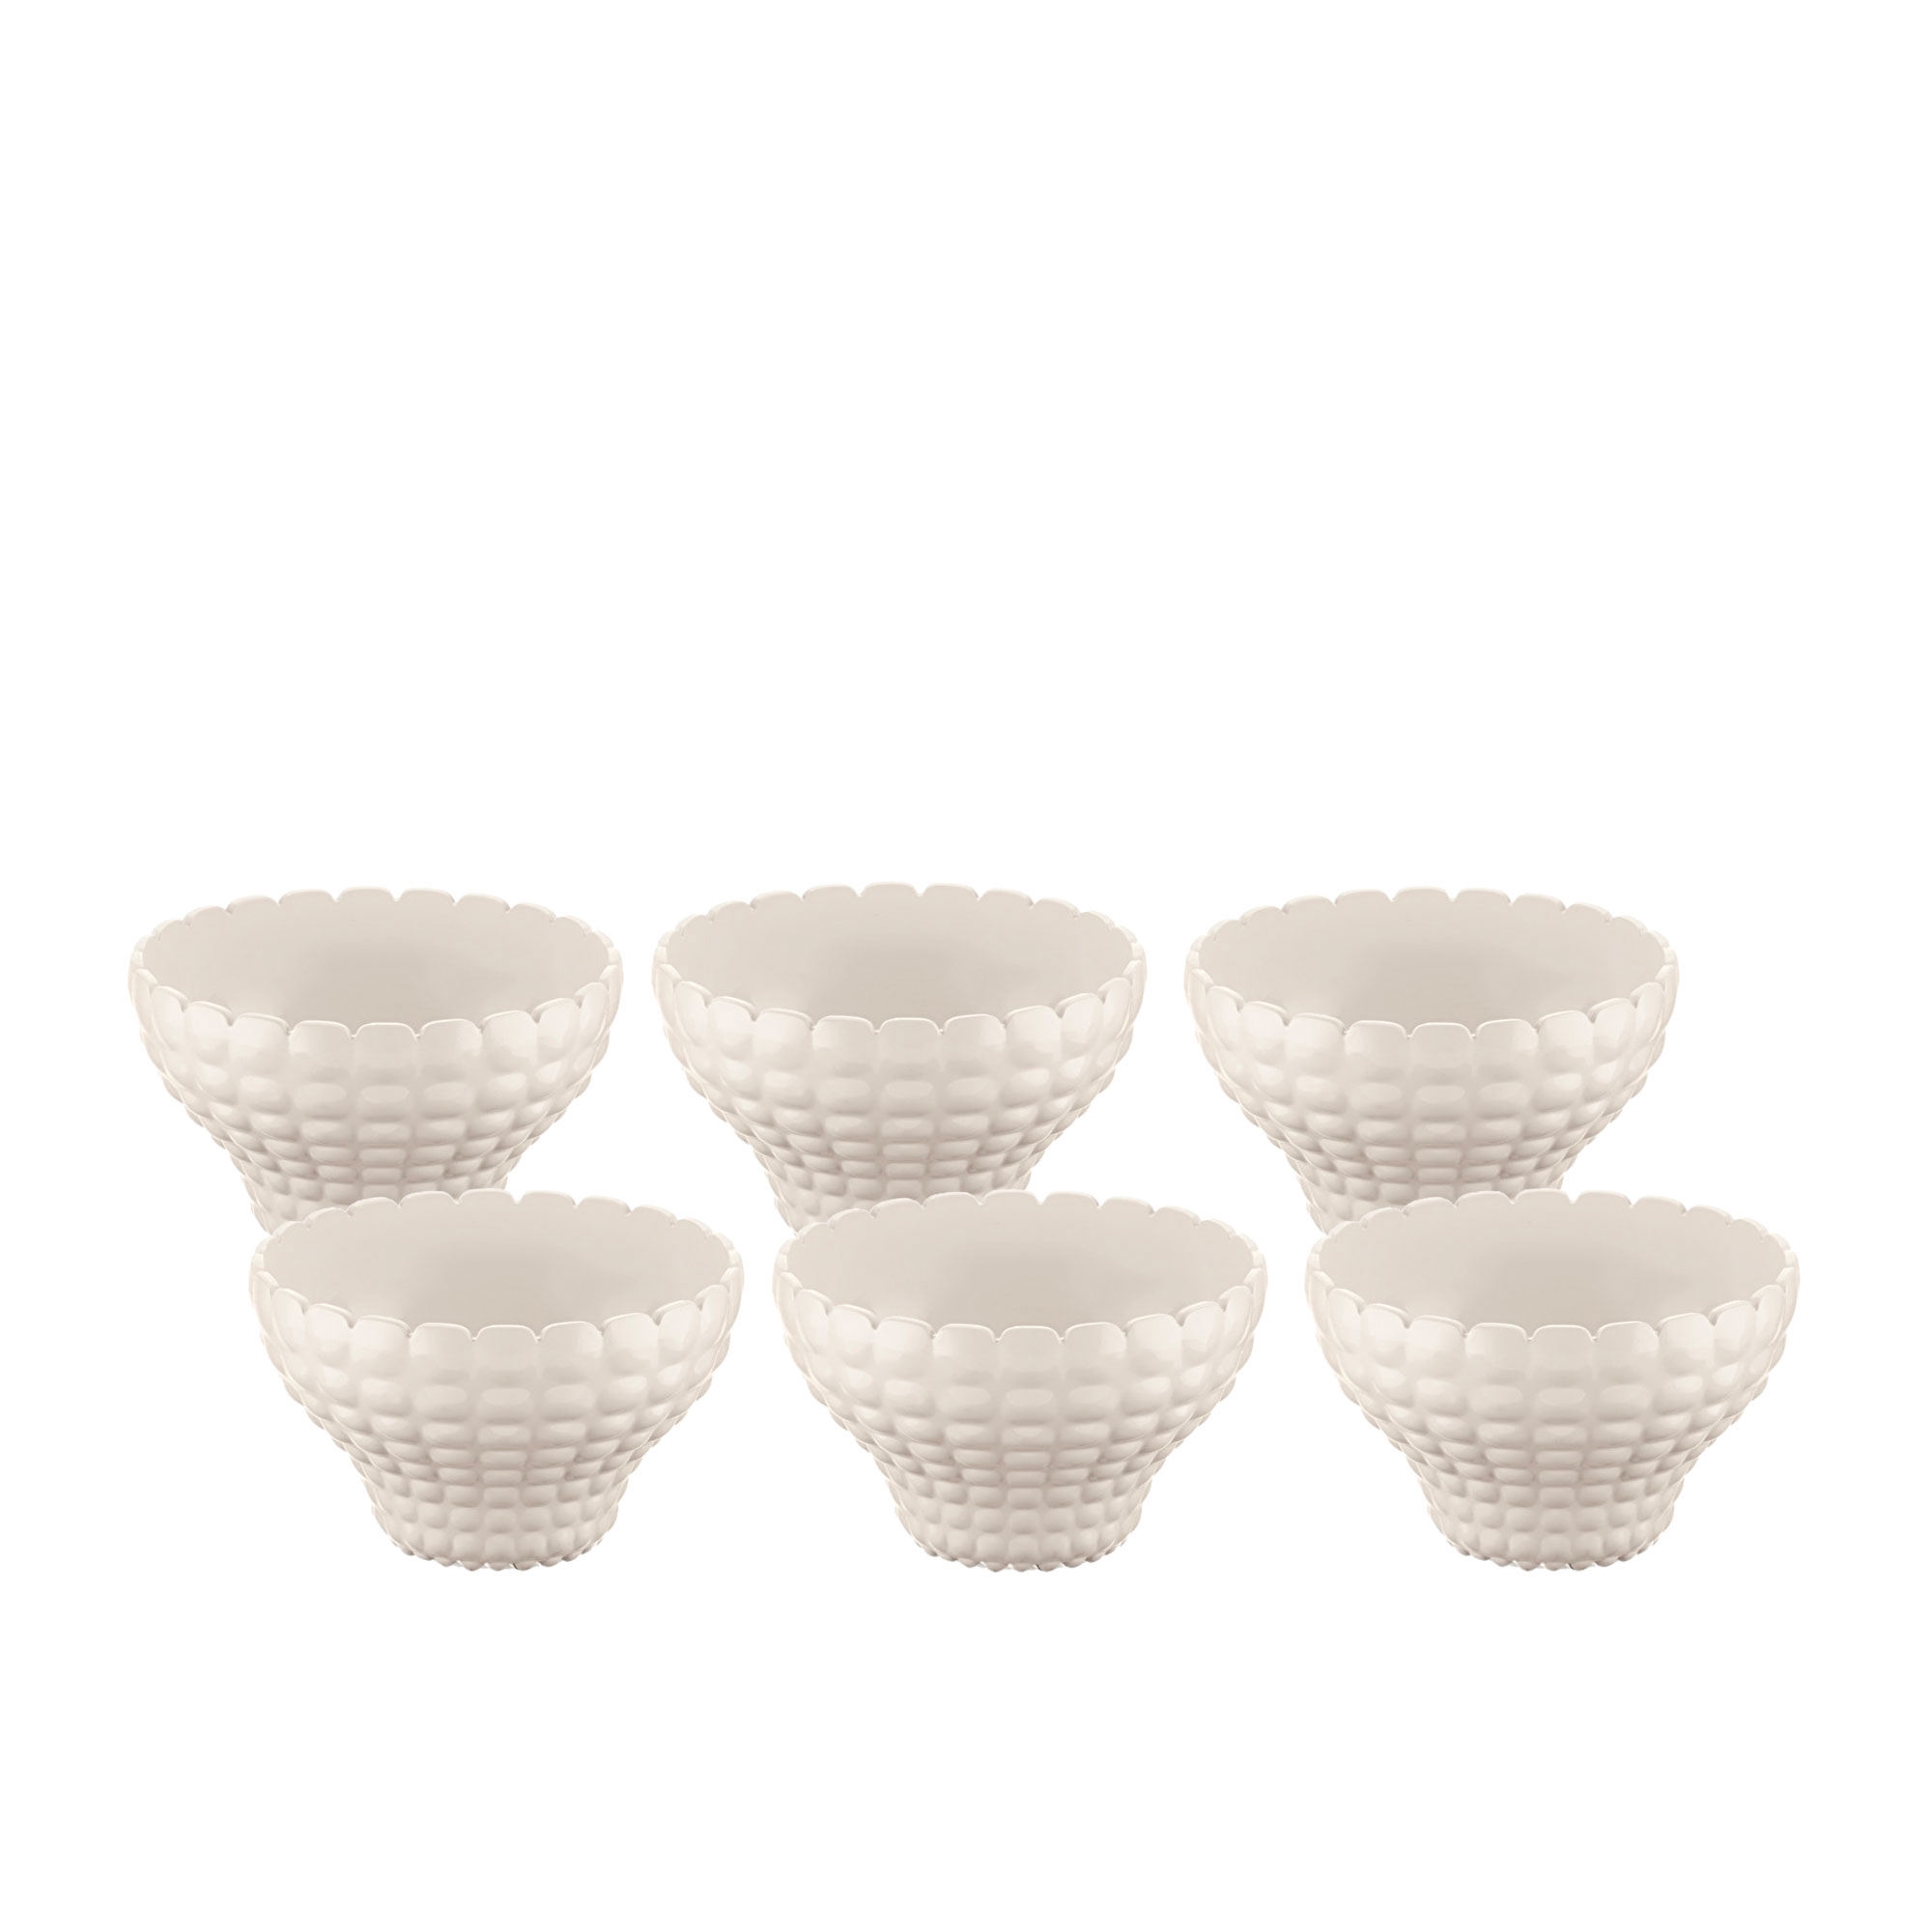 Guzzini Tiffany Serving Cup Set of 6 White Image 1